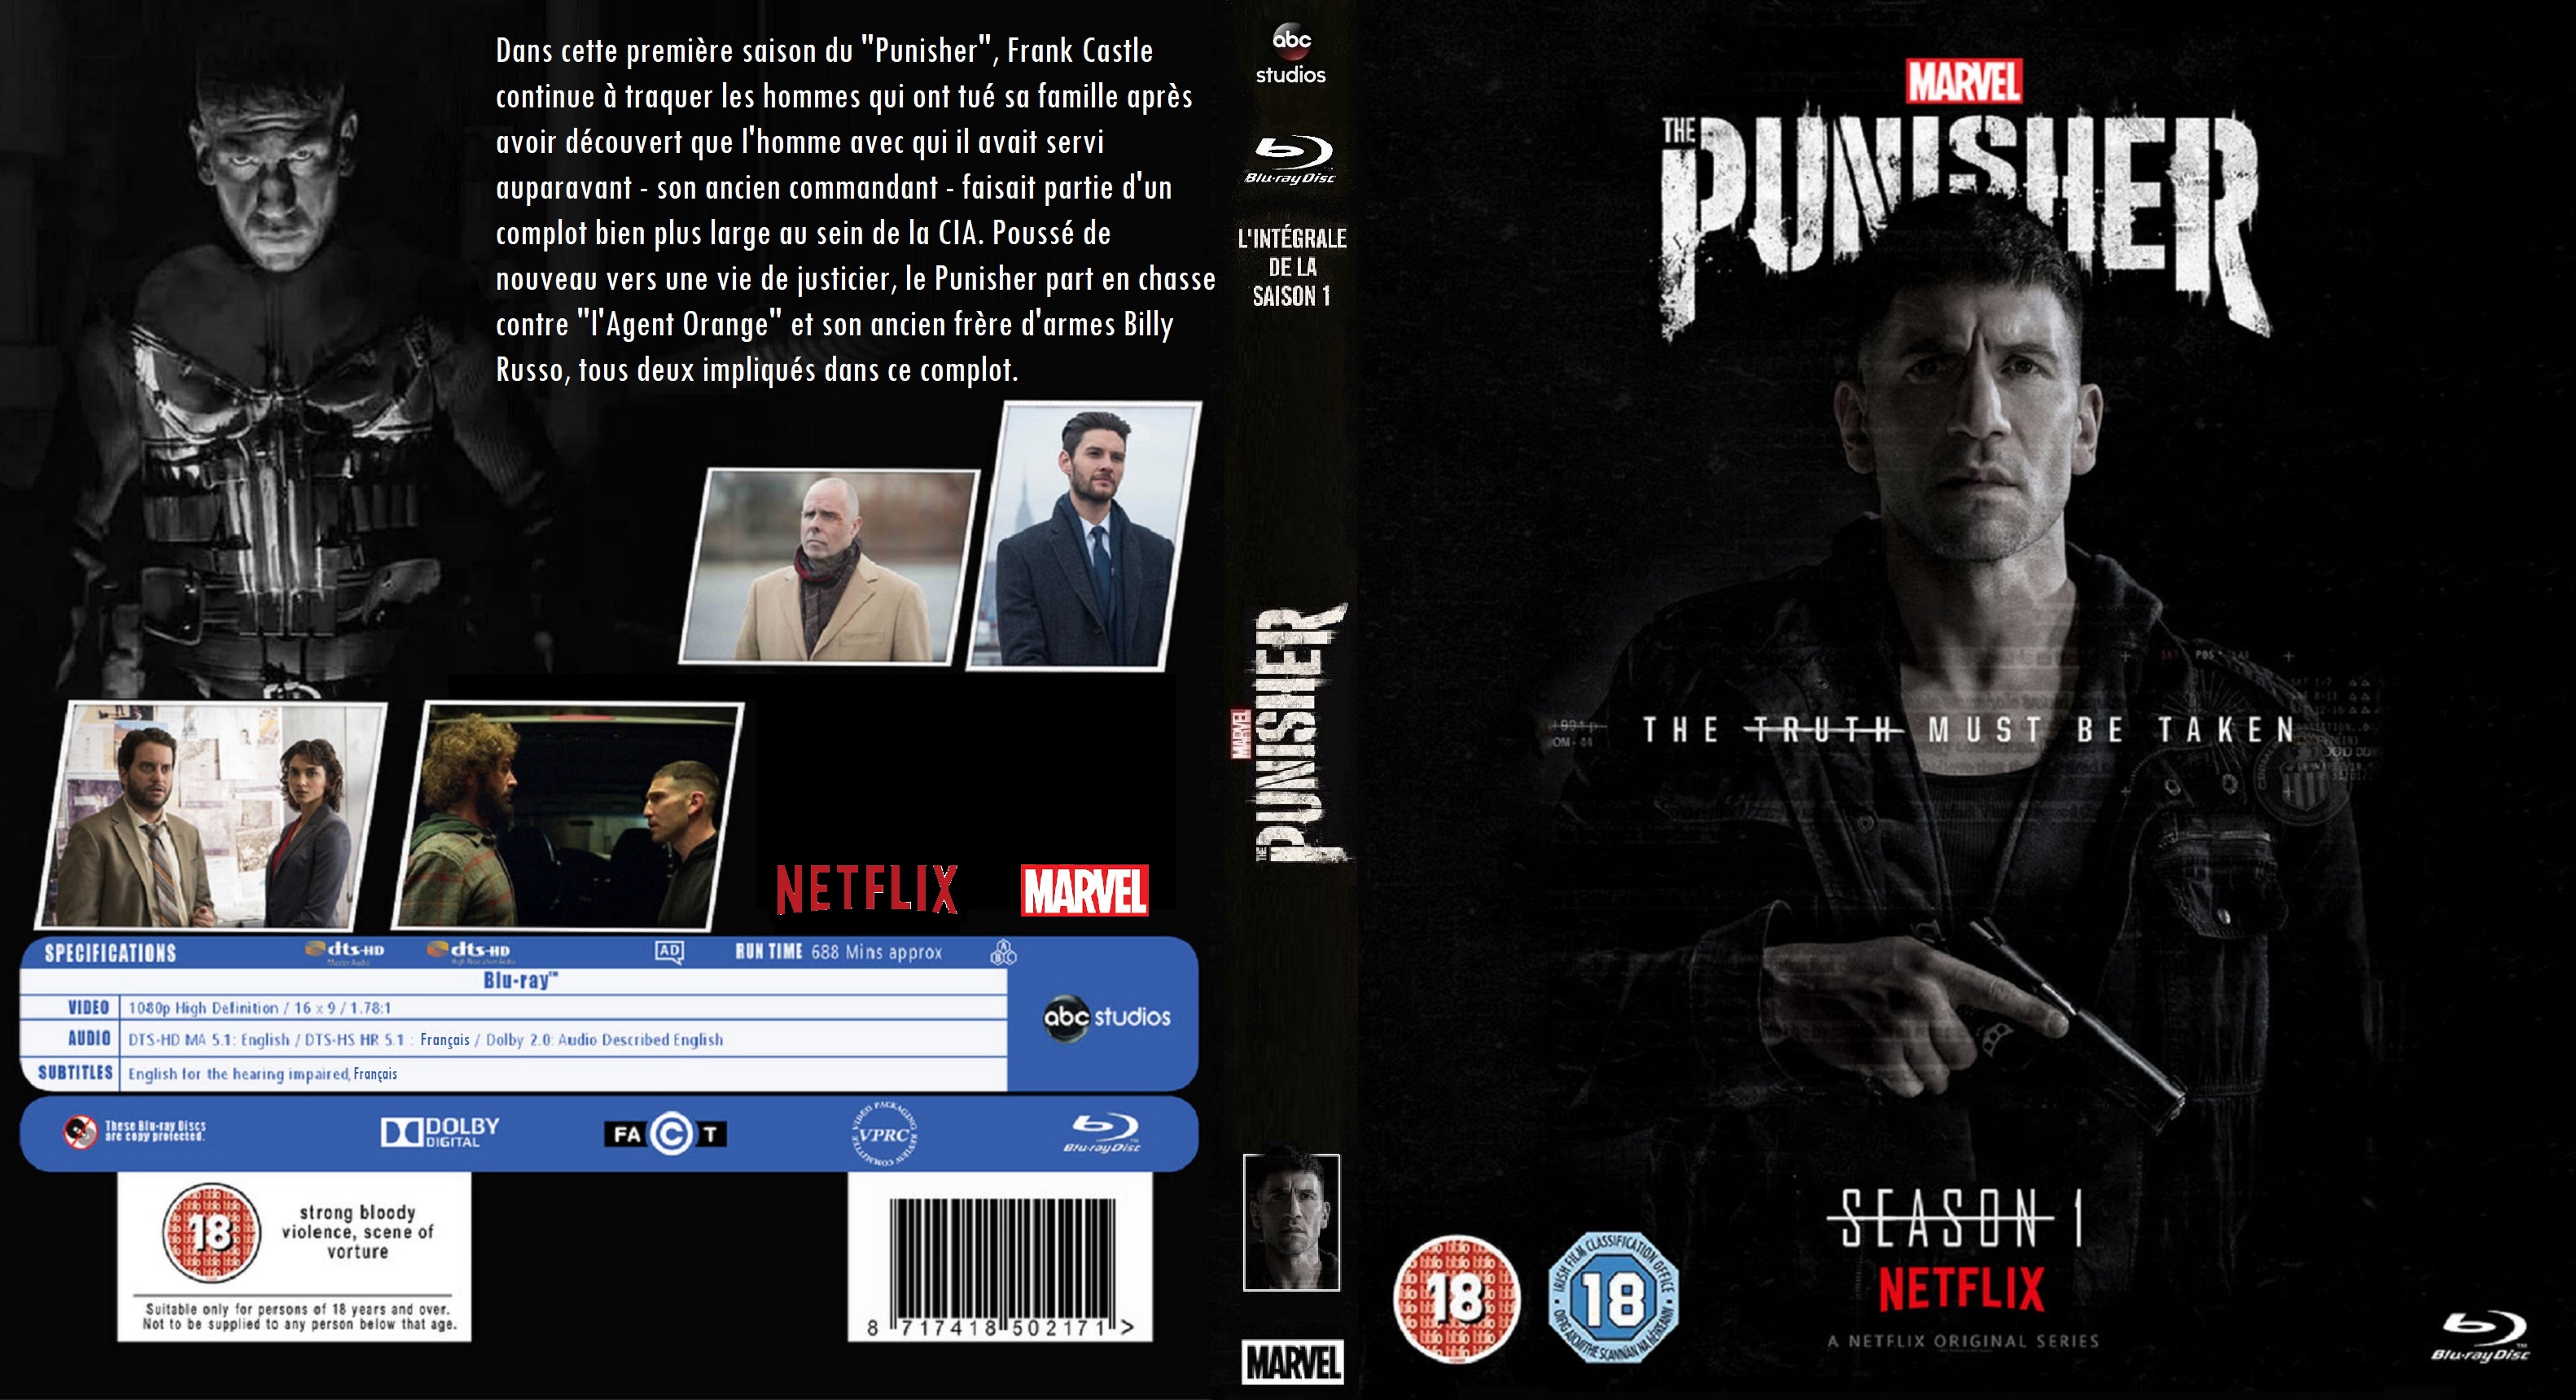 Jaquette DVD Punisher saison 1 Blu-ray custom v2